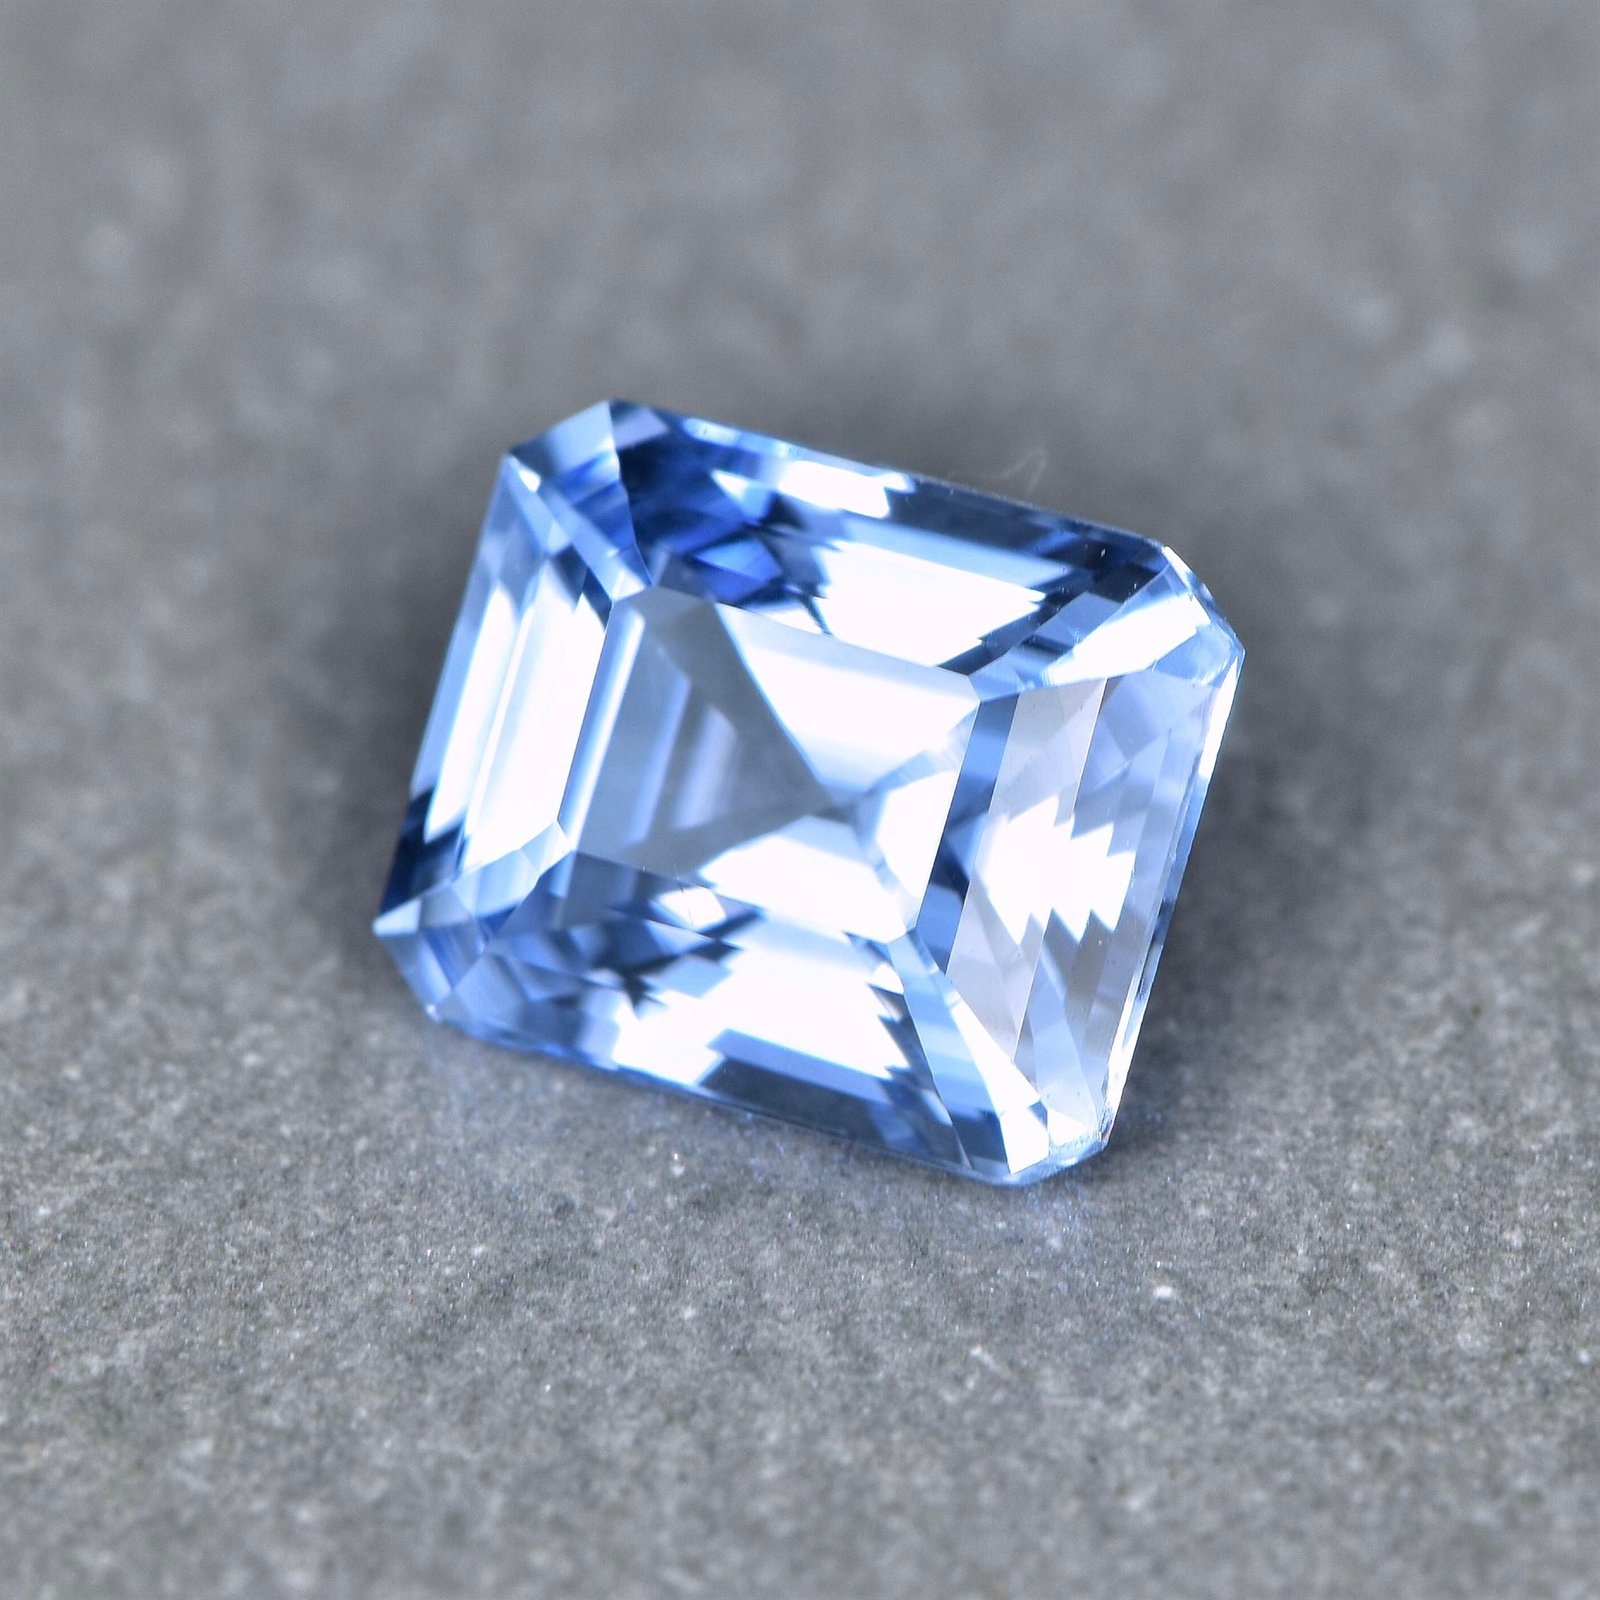 Natural Sri Lankan Blue Sapphire 2.11 carat – The Gem World Holdings ...